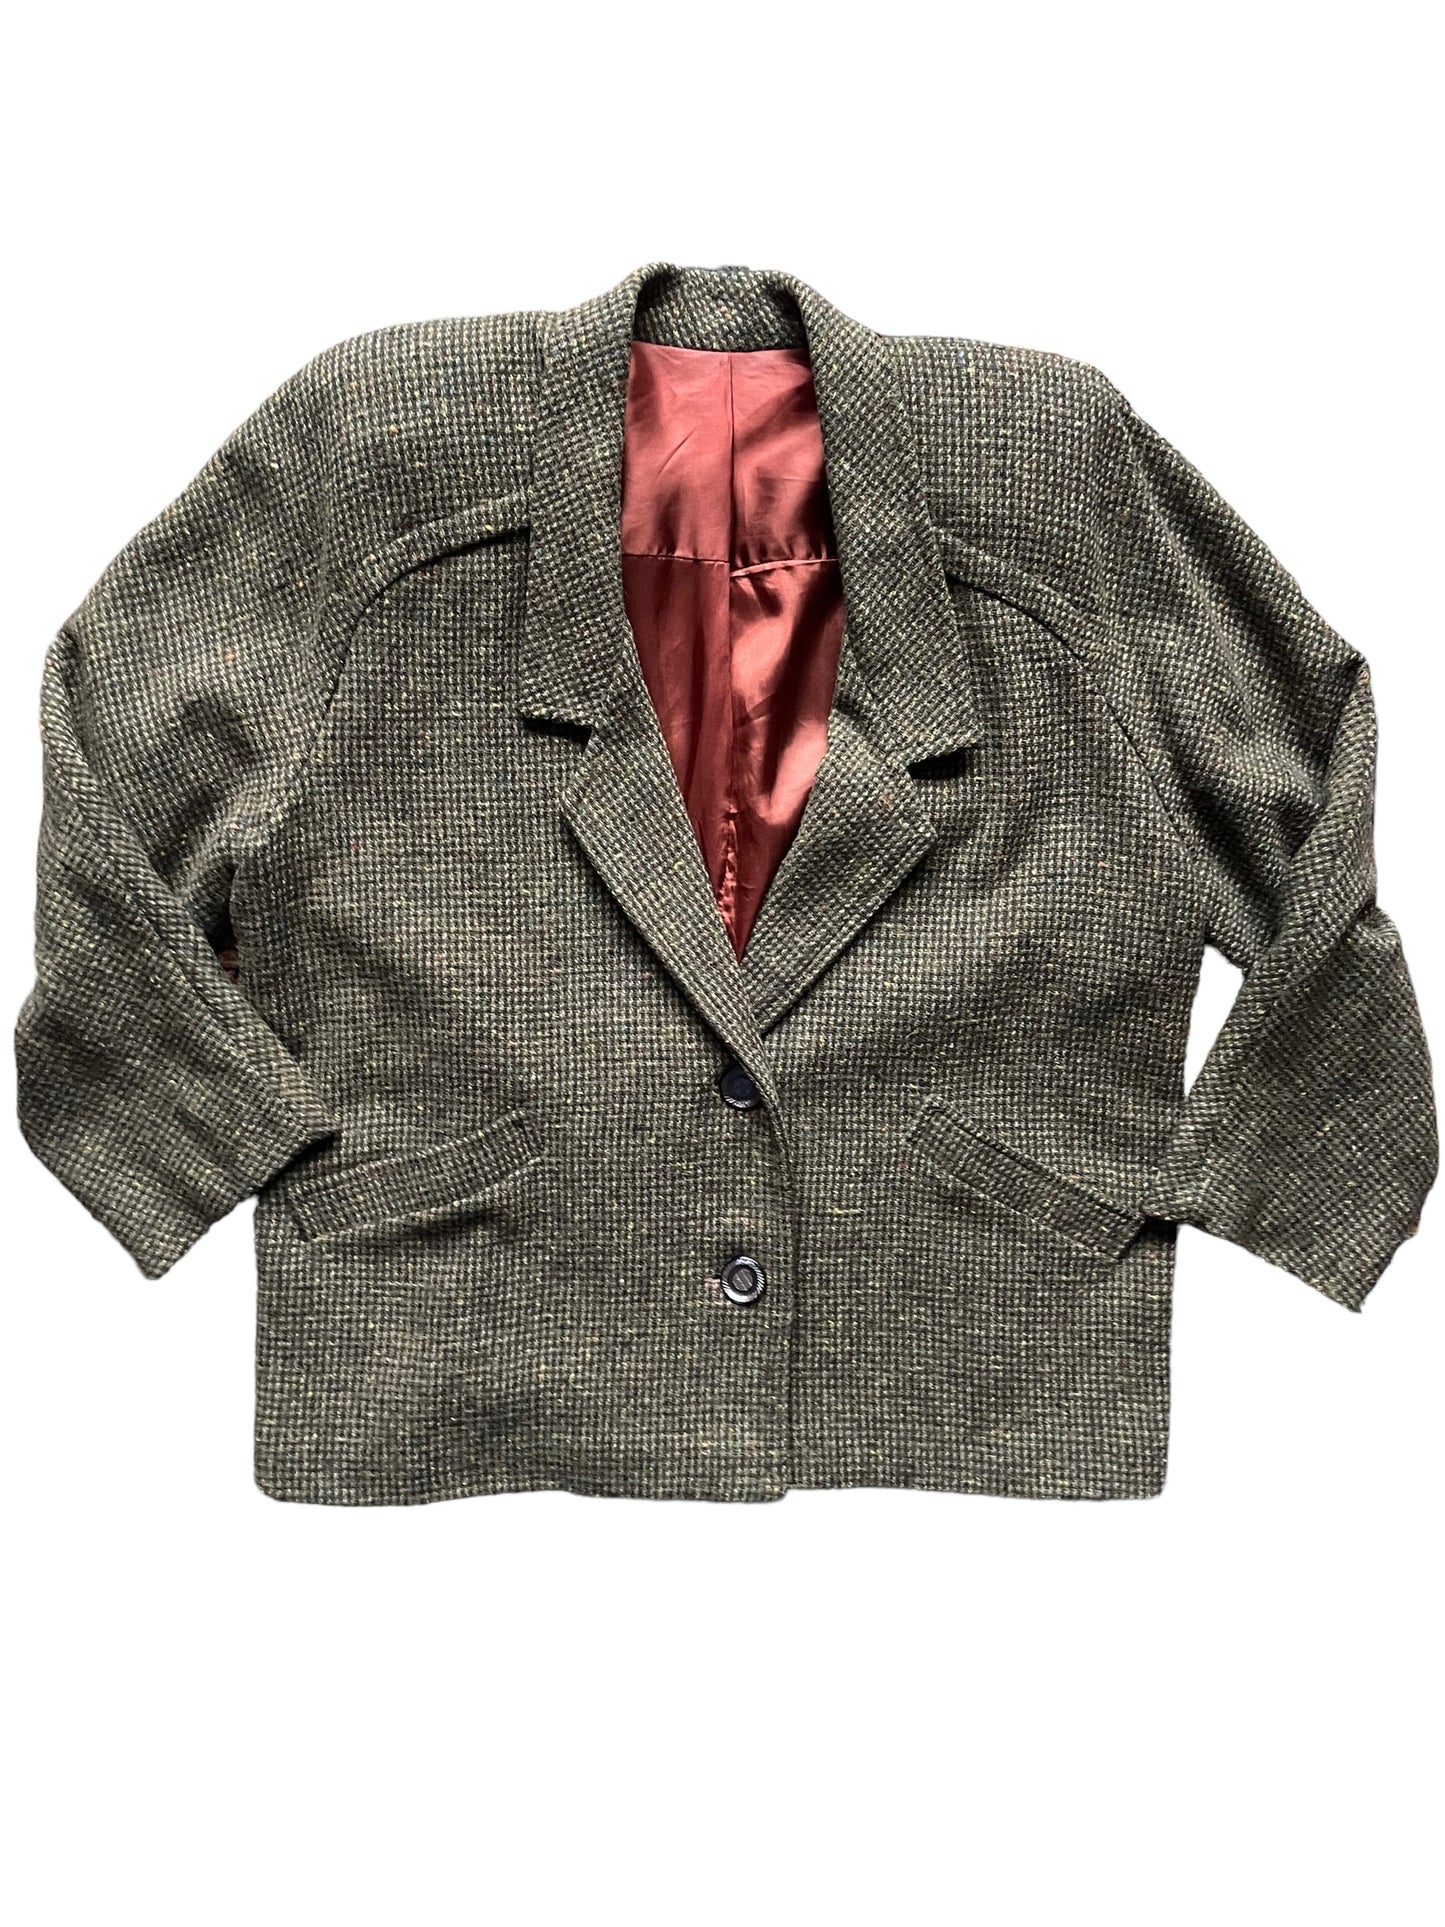 Full front view of Vintage 1940s Tweed Boxy Blazer SZ L | Seattle True Vintage | Barn Owl Vintage Coats